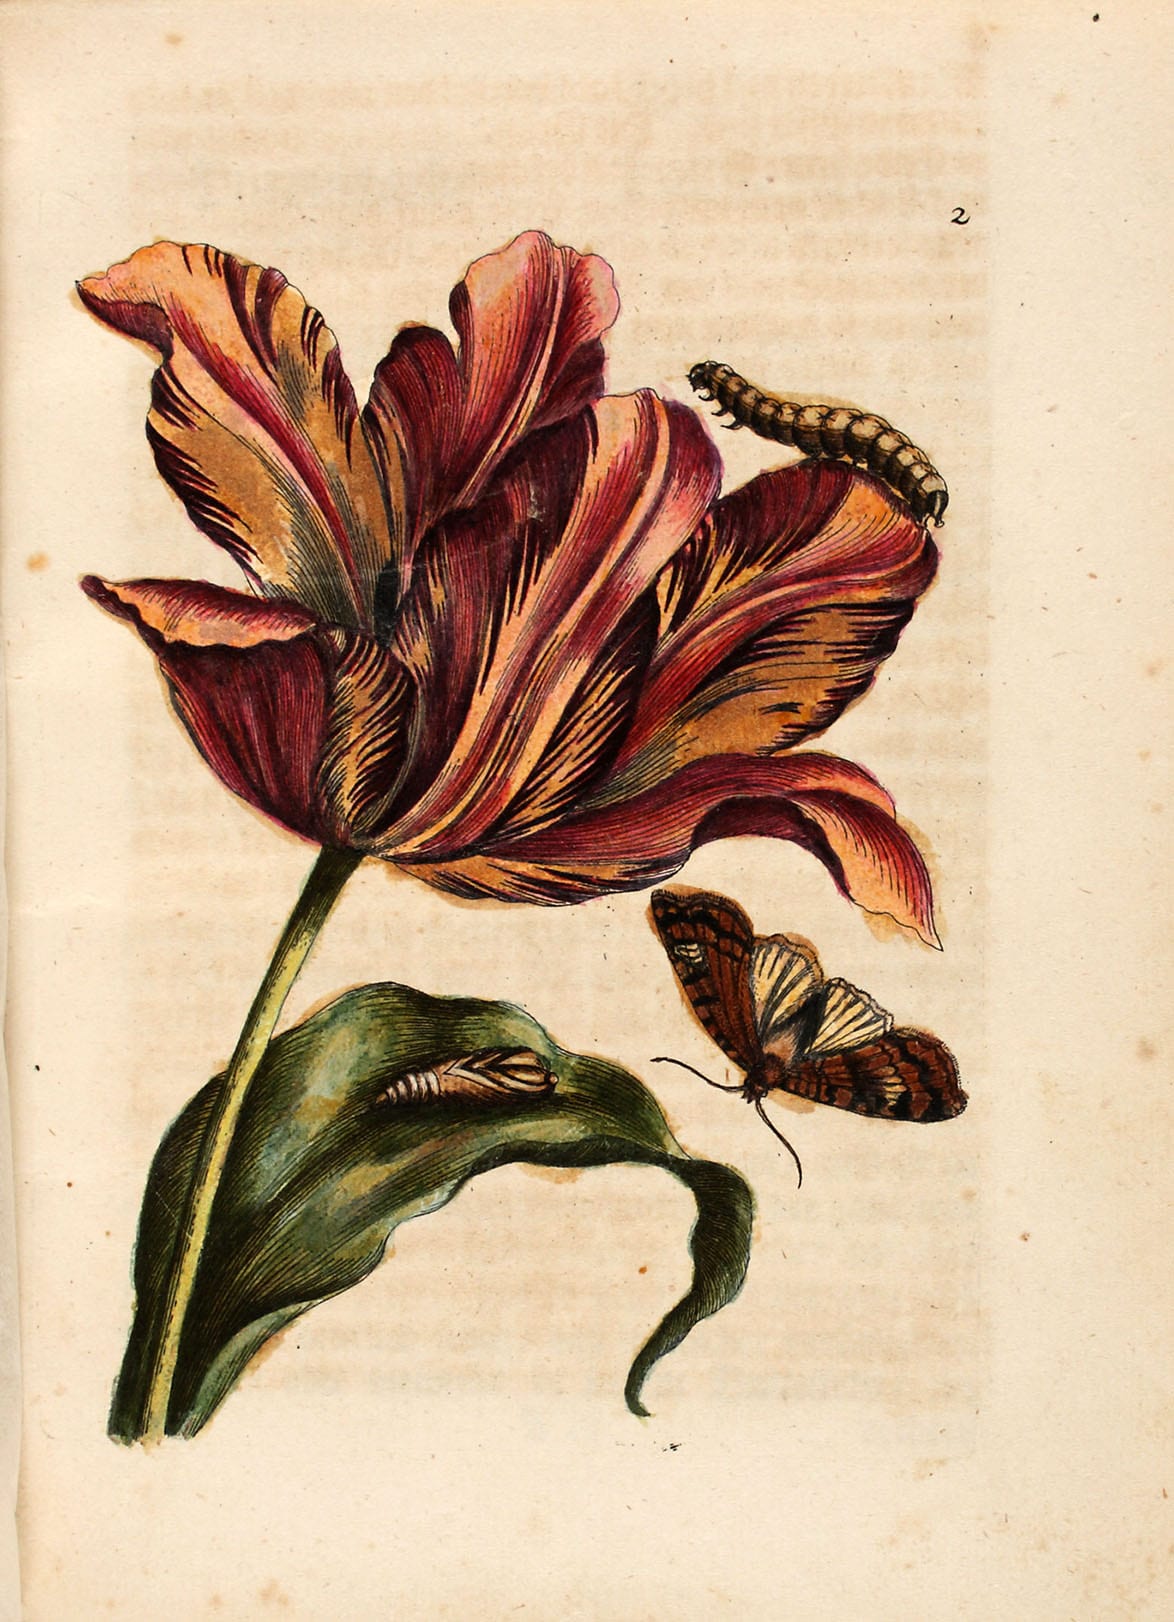 Maria Sibylla Merian: Der Raupen wunderbare Verwandelung und sonderbare Blumennahrung, Band 1, Abbildung 2 "Purpurfarbe Tulipan (Tulipa purpurea)"